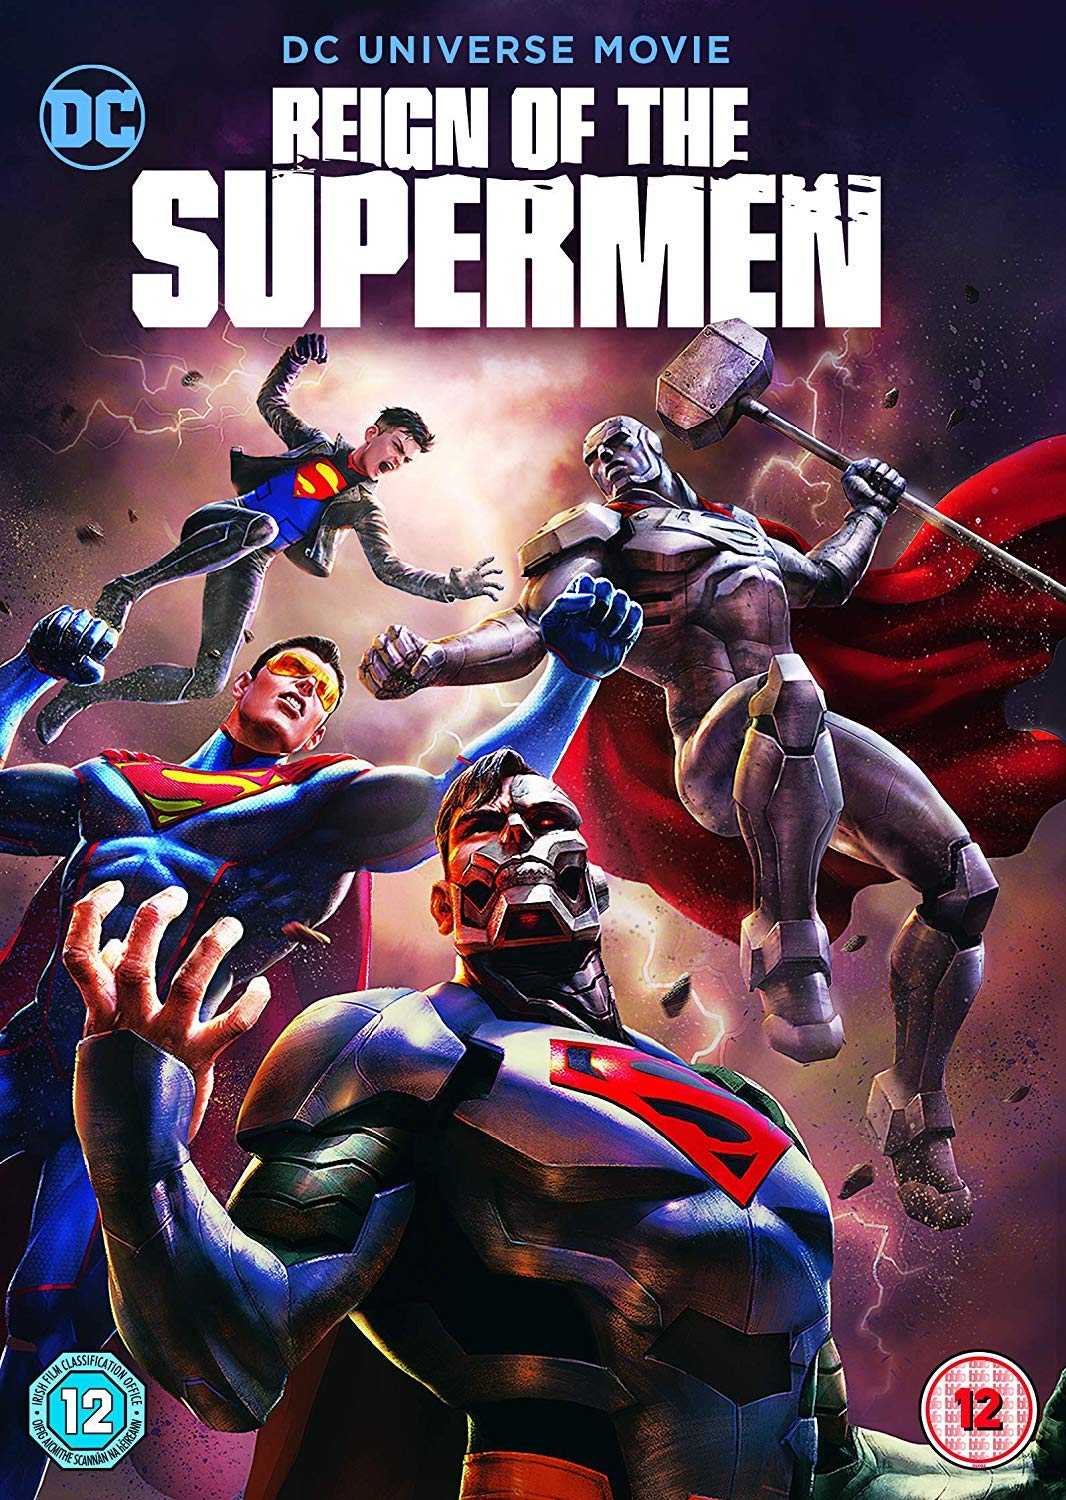 Stiahni si Filmy Kreslené Era Supermanu / Reign of the Supermen  (2019)(CZ)[TvRip] = CSFD 66%